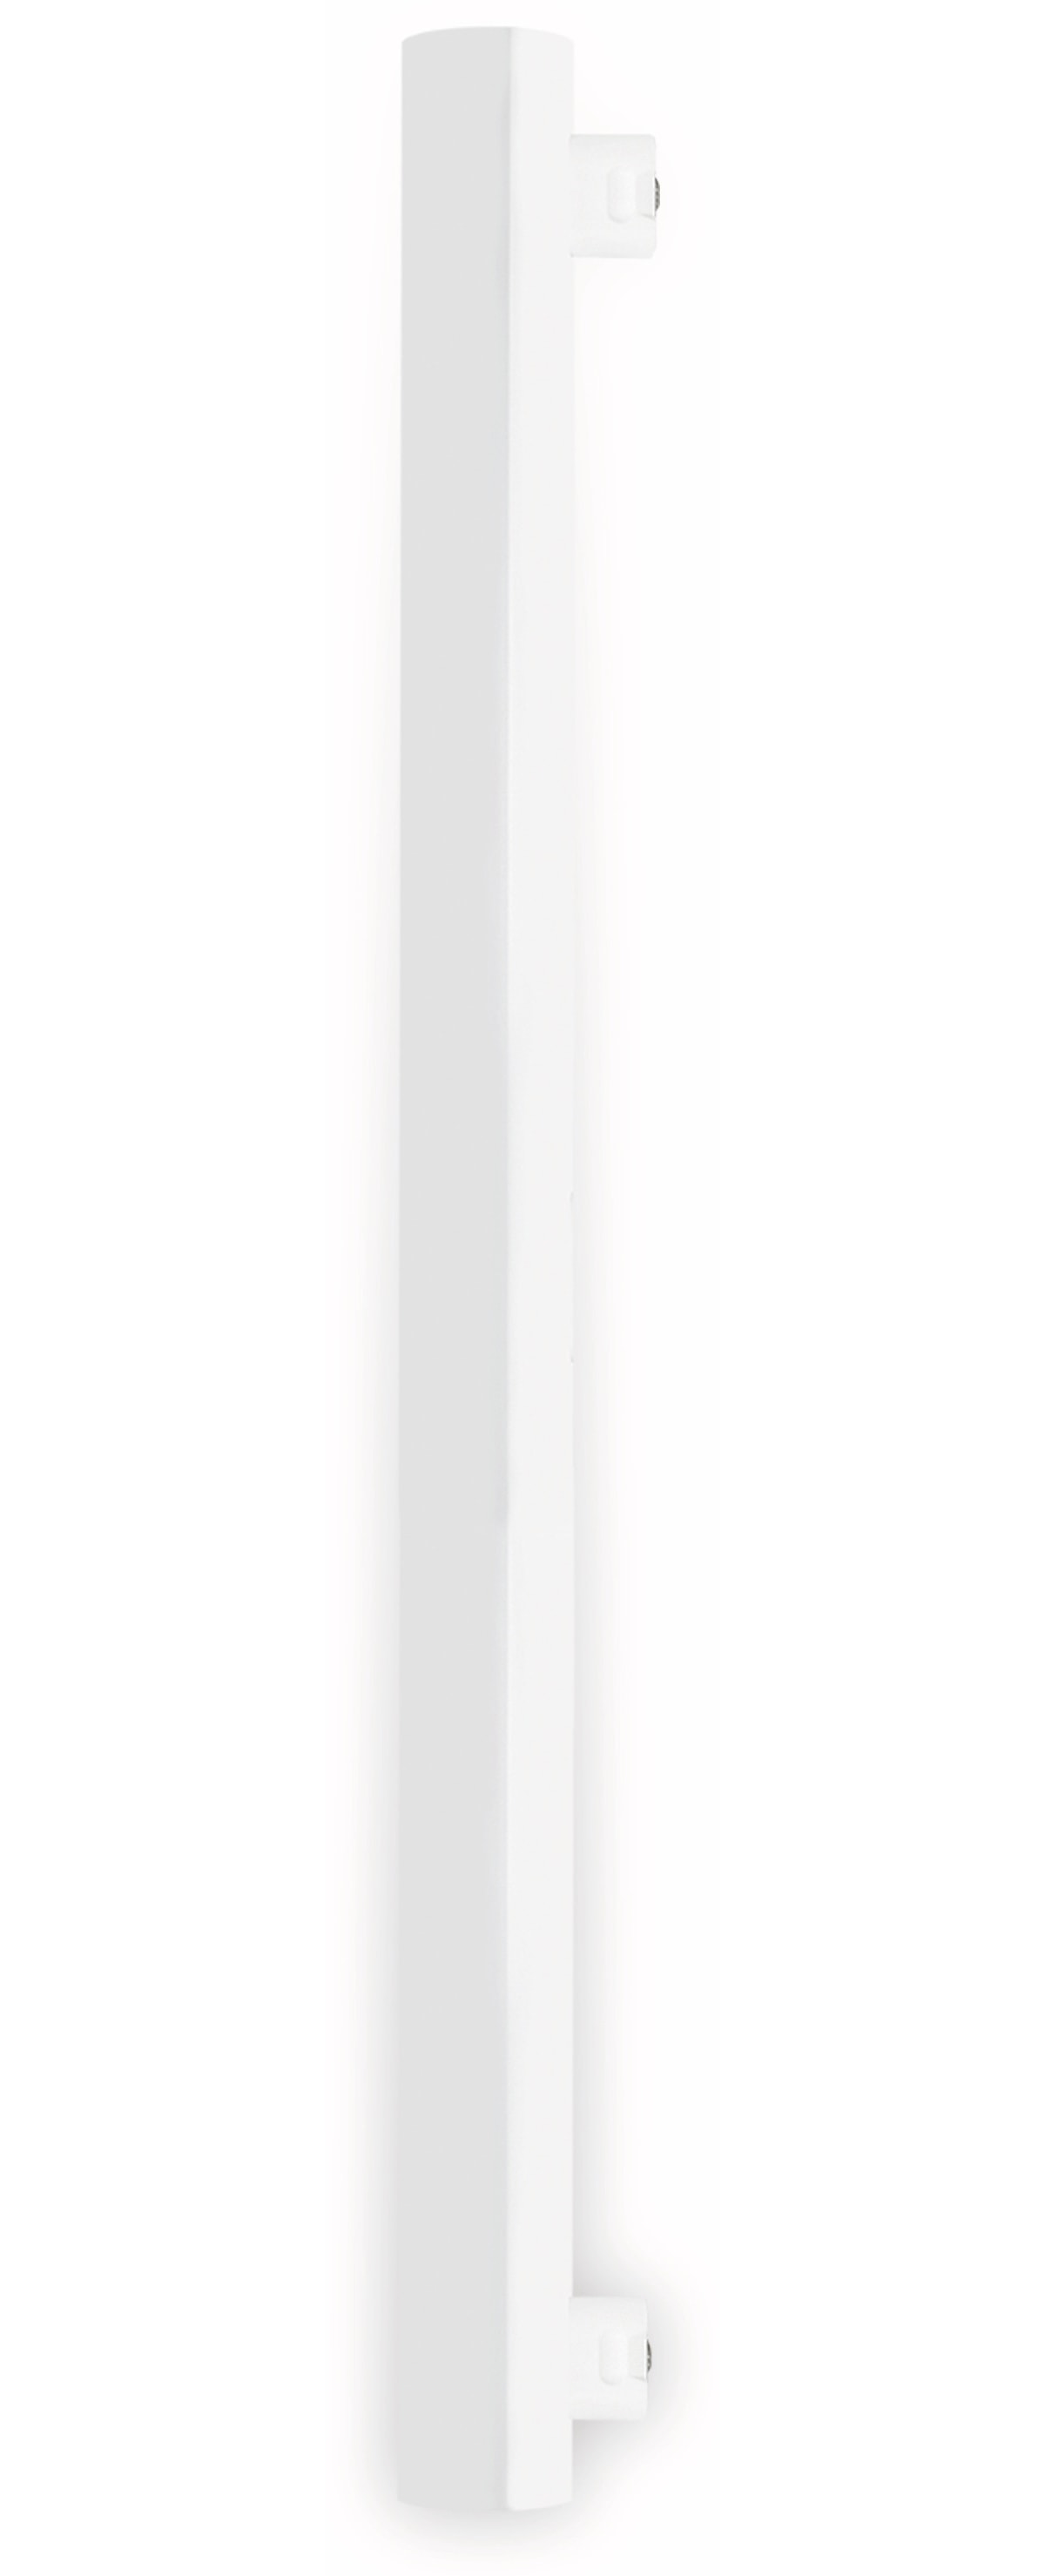 BLULAXA LED-Linienlampe 47521, EEK: G, 30 cm, 5 W, 400 lm, S14S